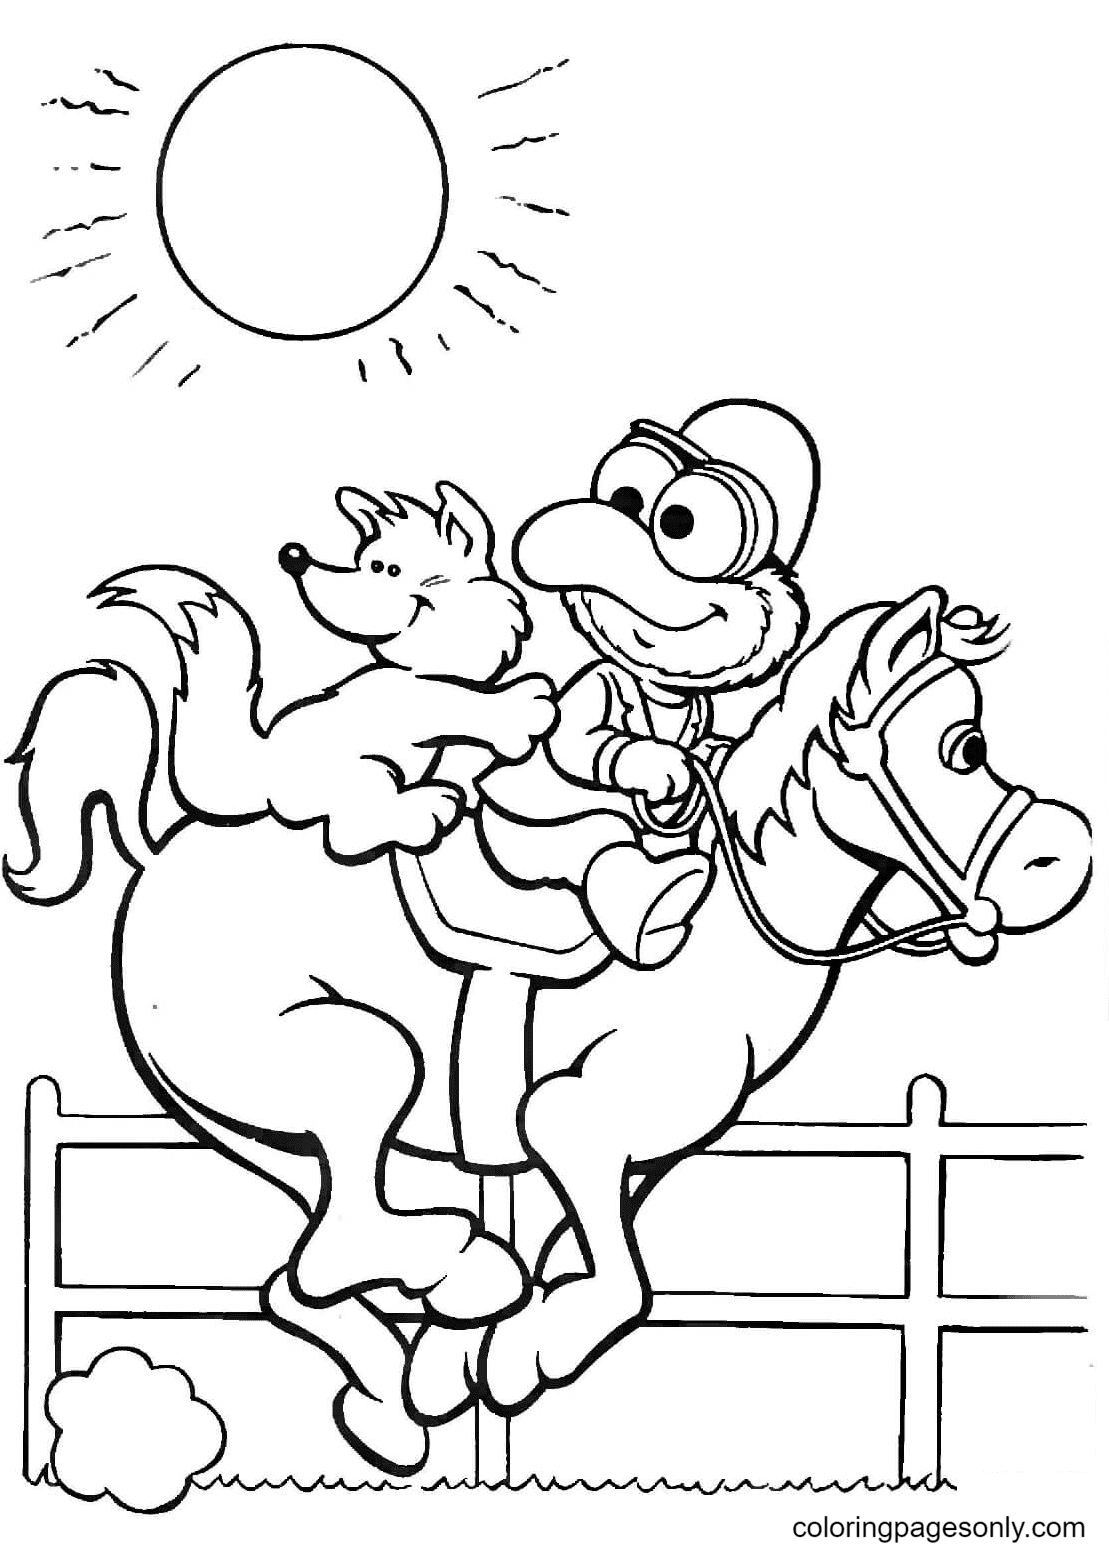 Гонзо и лиса катаются на лошадях из «Маппет-бэби»